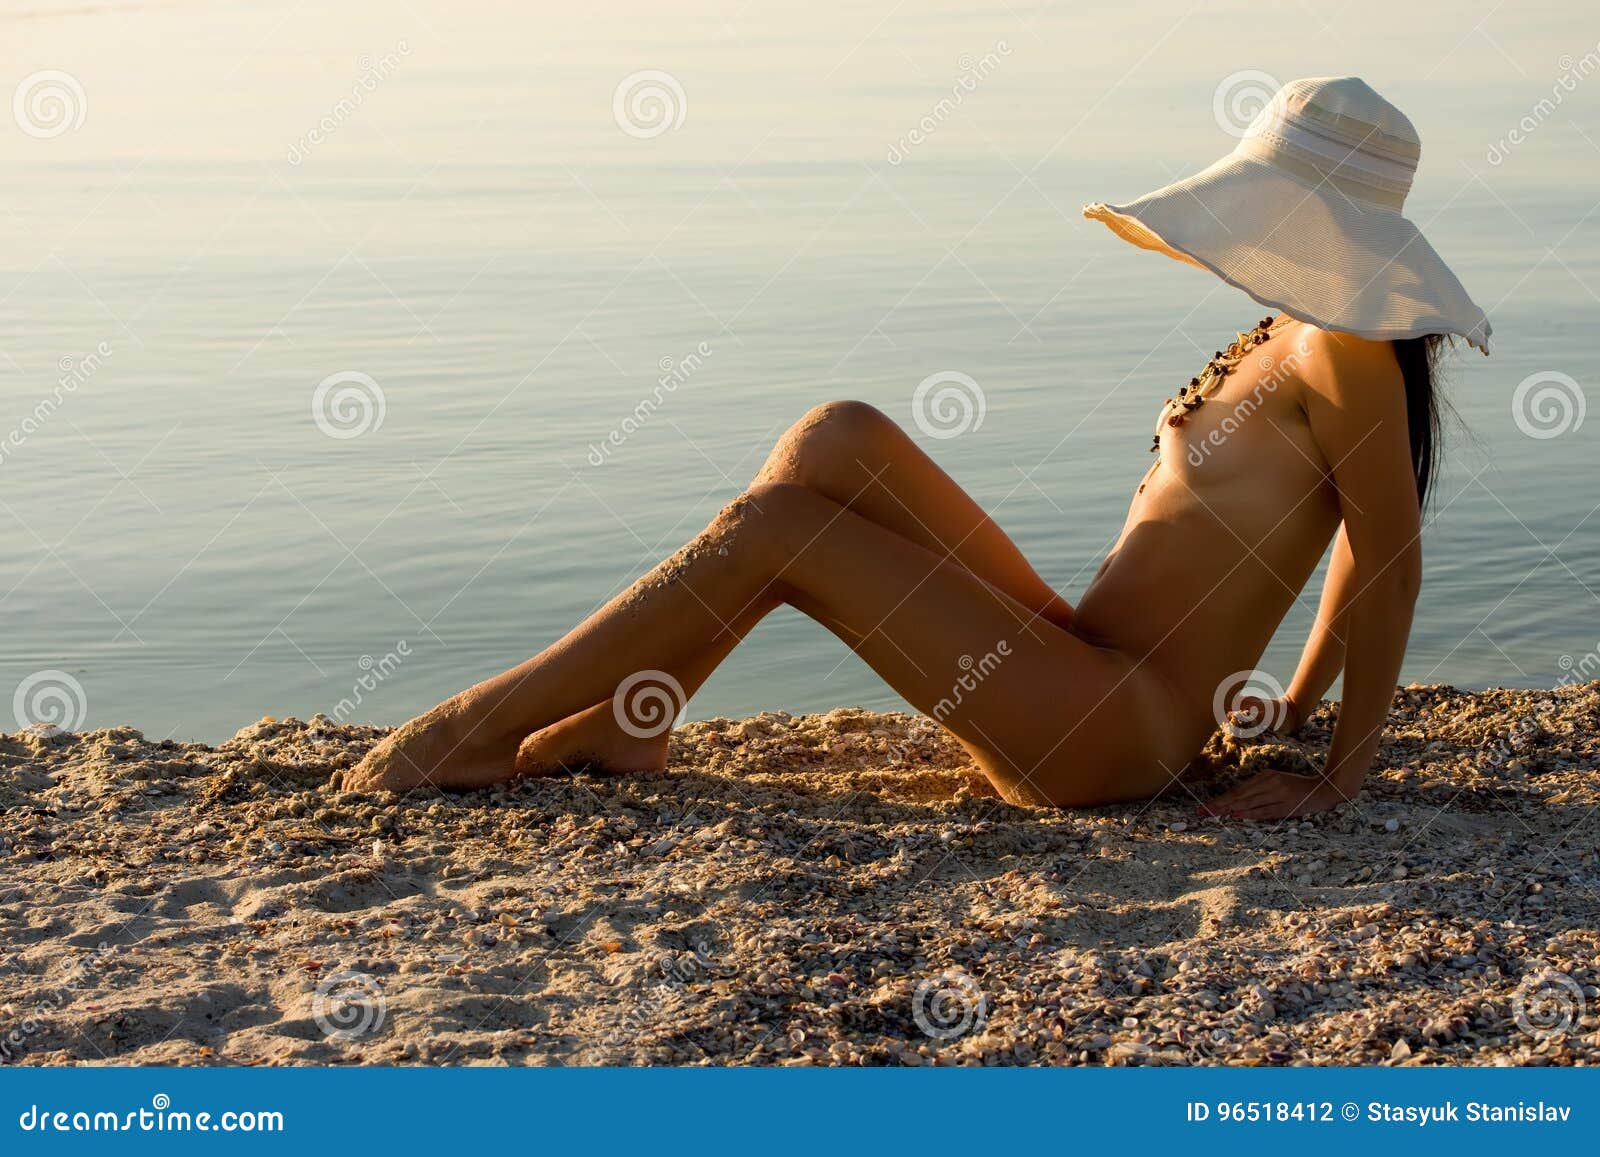 naked girl at the beach